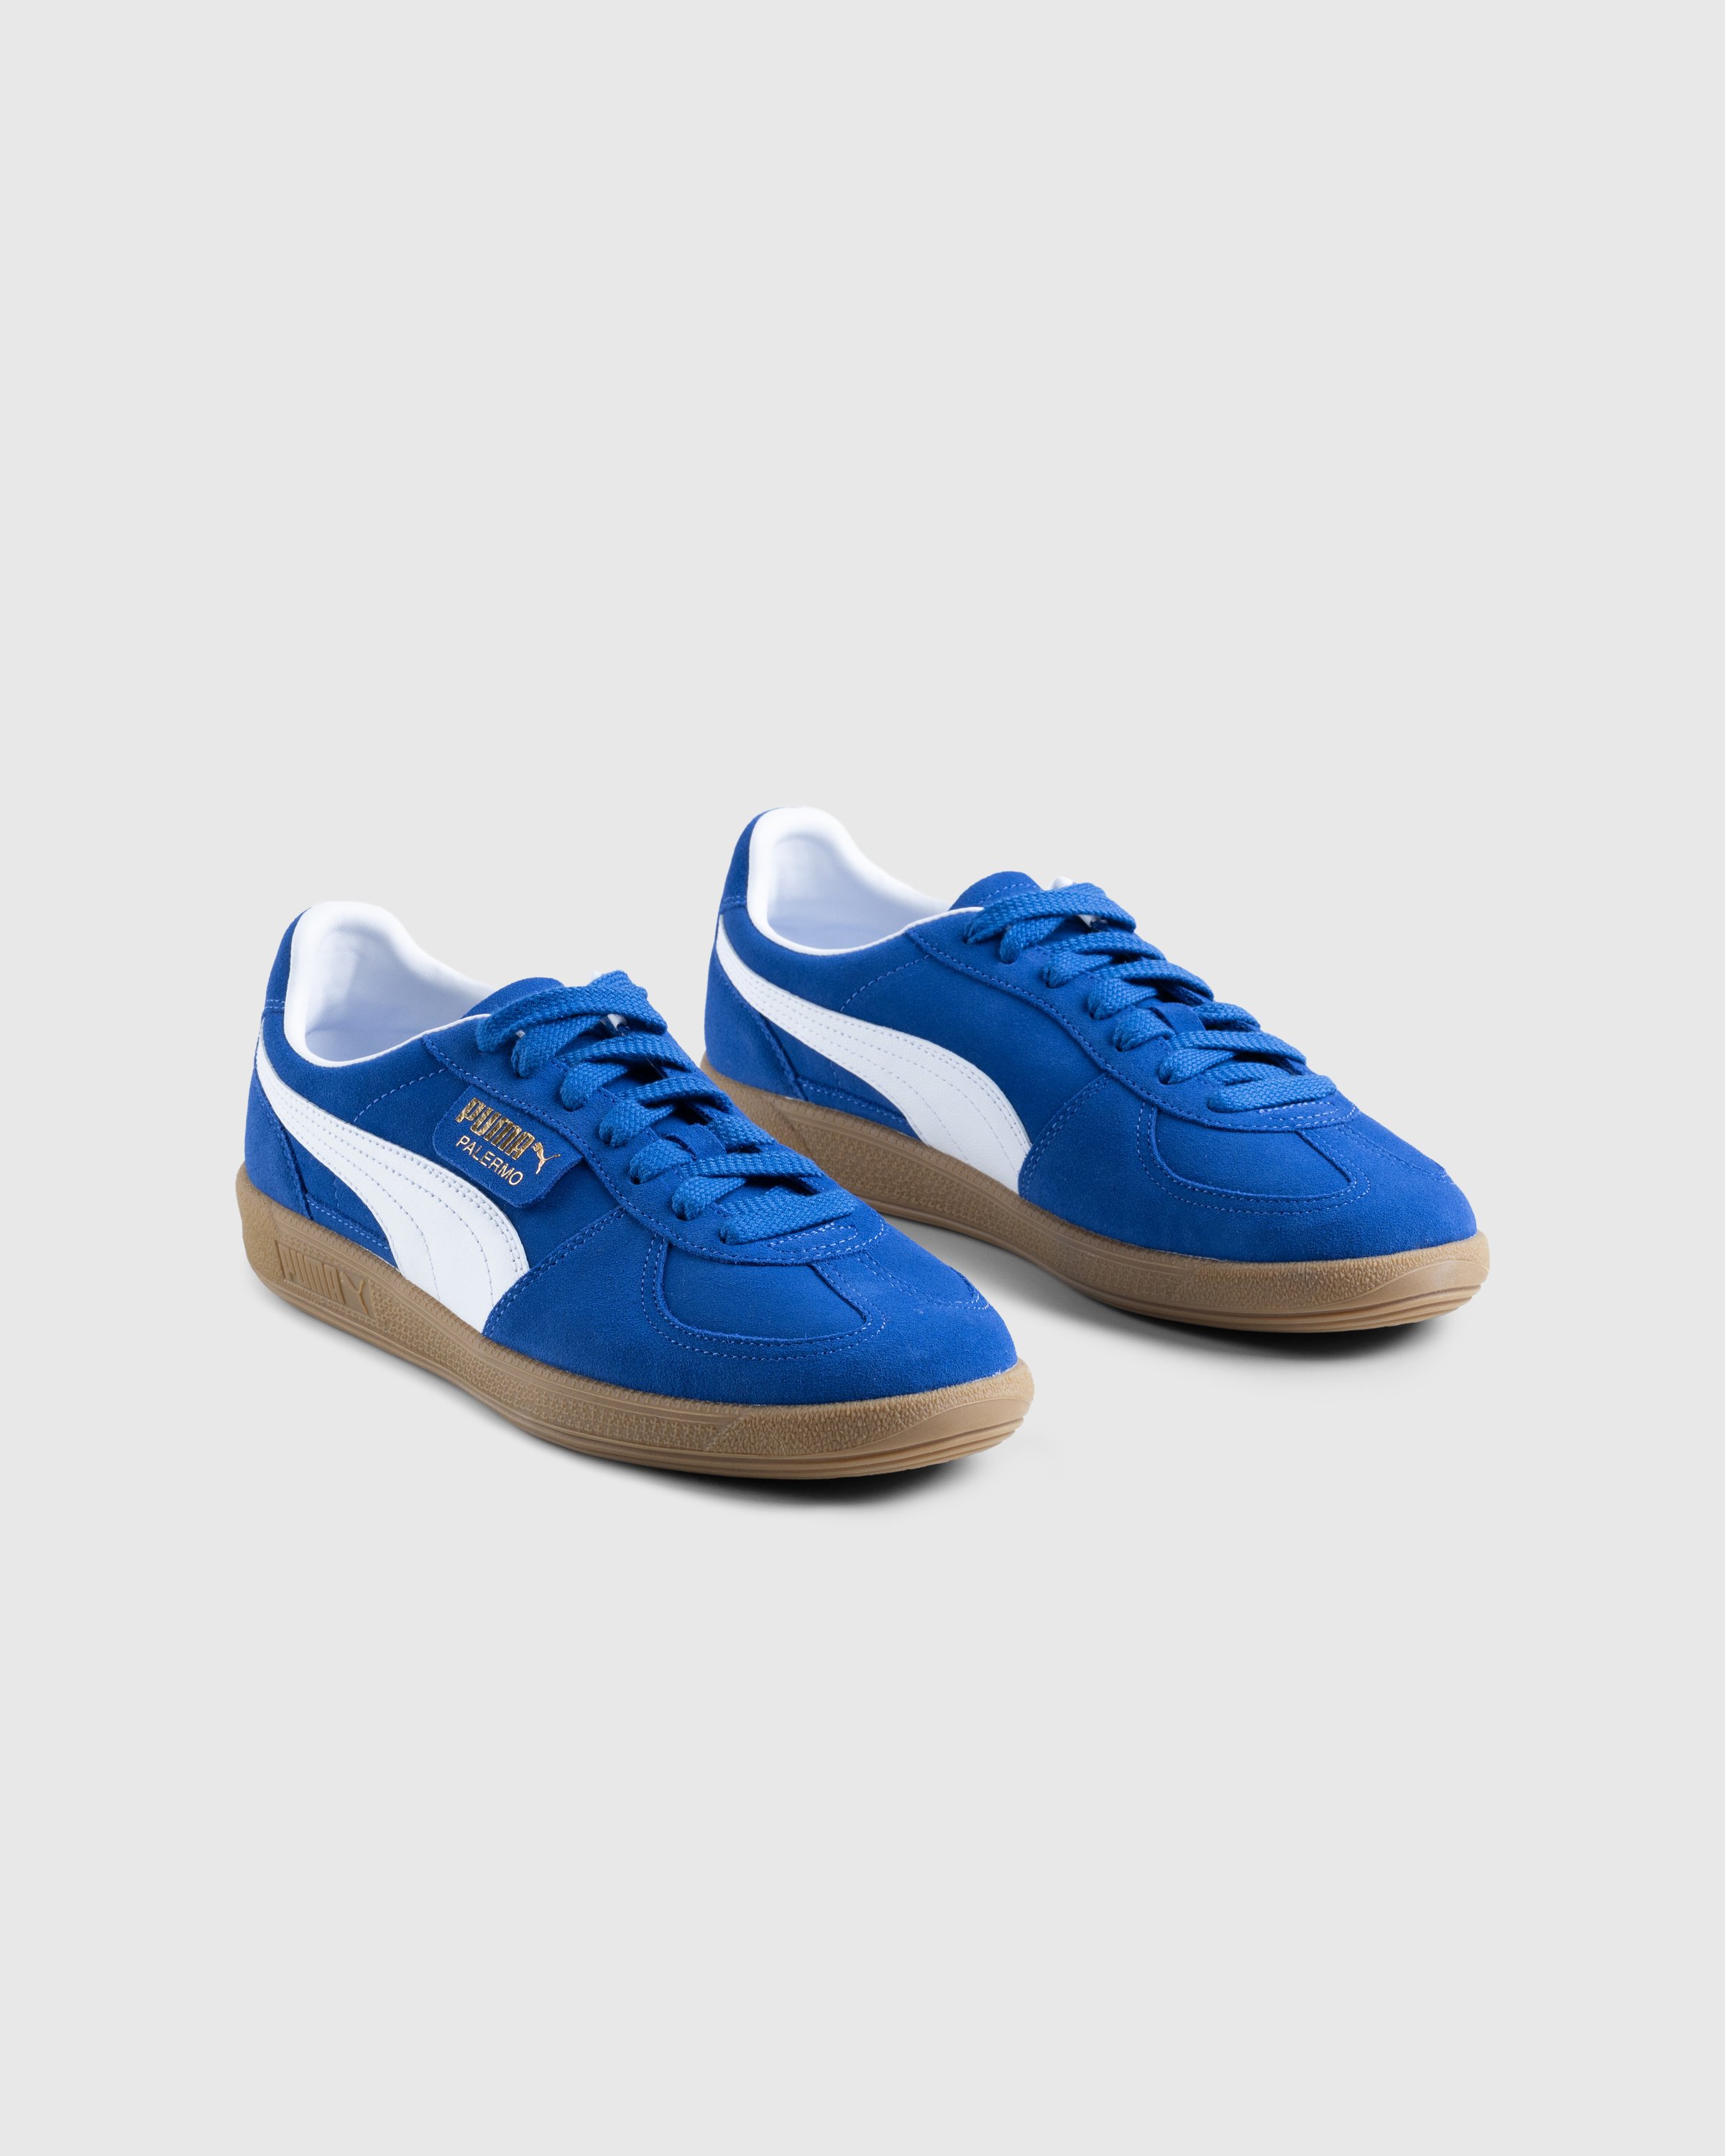 Puma - Palermo Cobalt Glaze/White - Footwear - Blue - Image 3